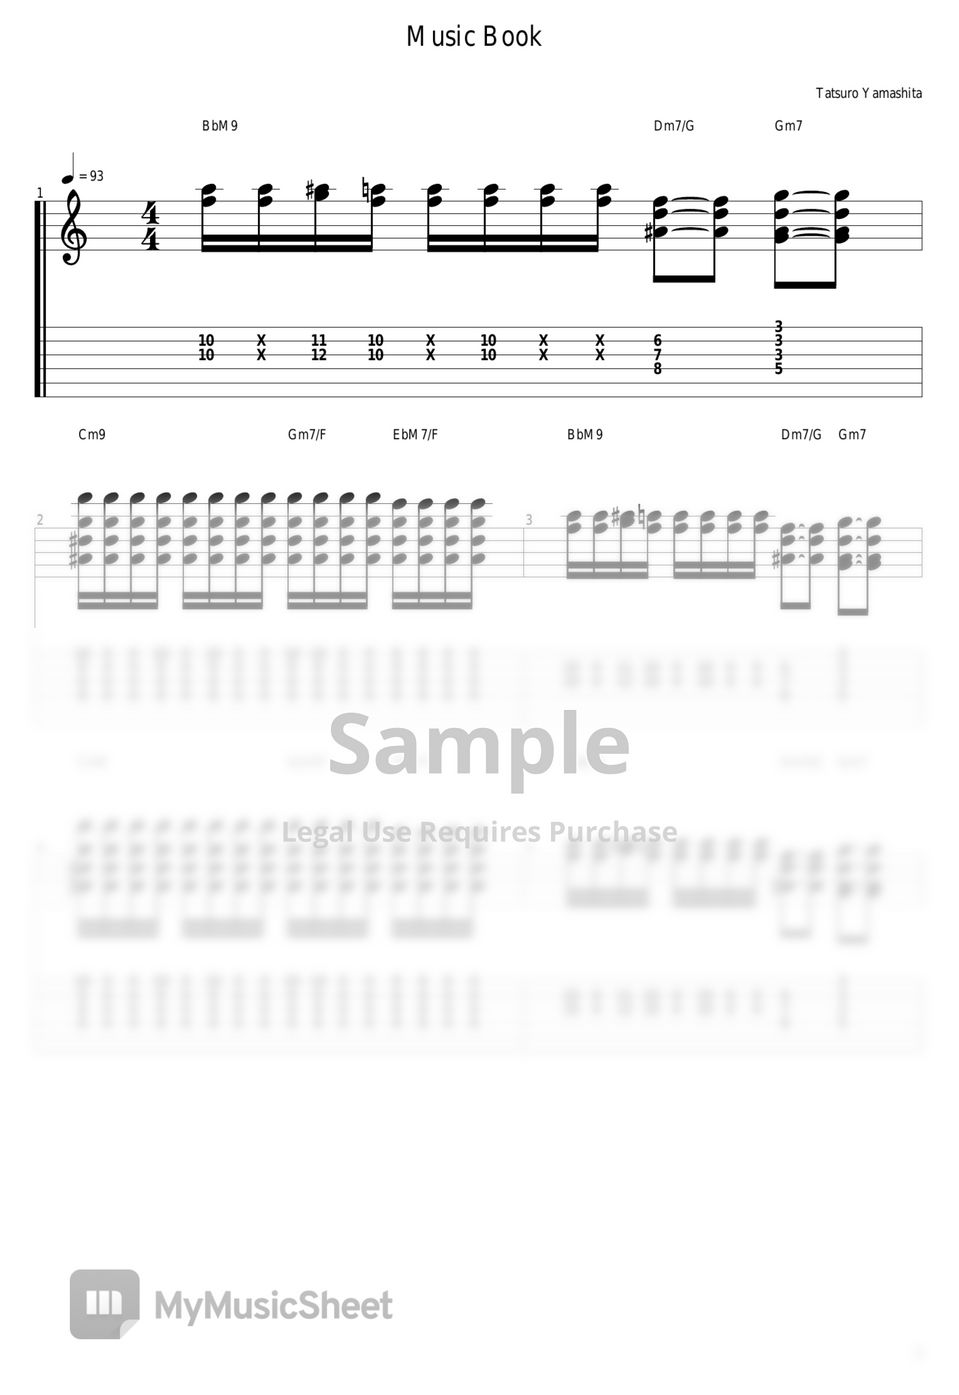 Tatsuro Yamashita - Music Book by guitar cover with tab